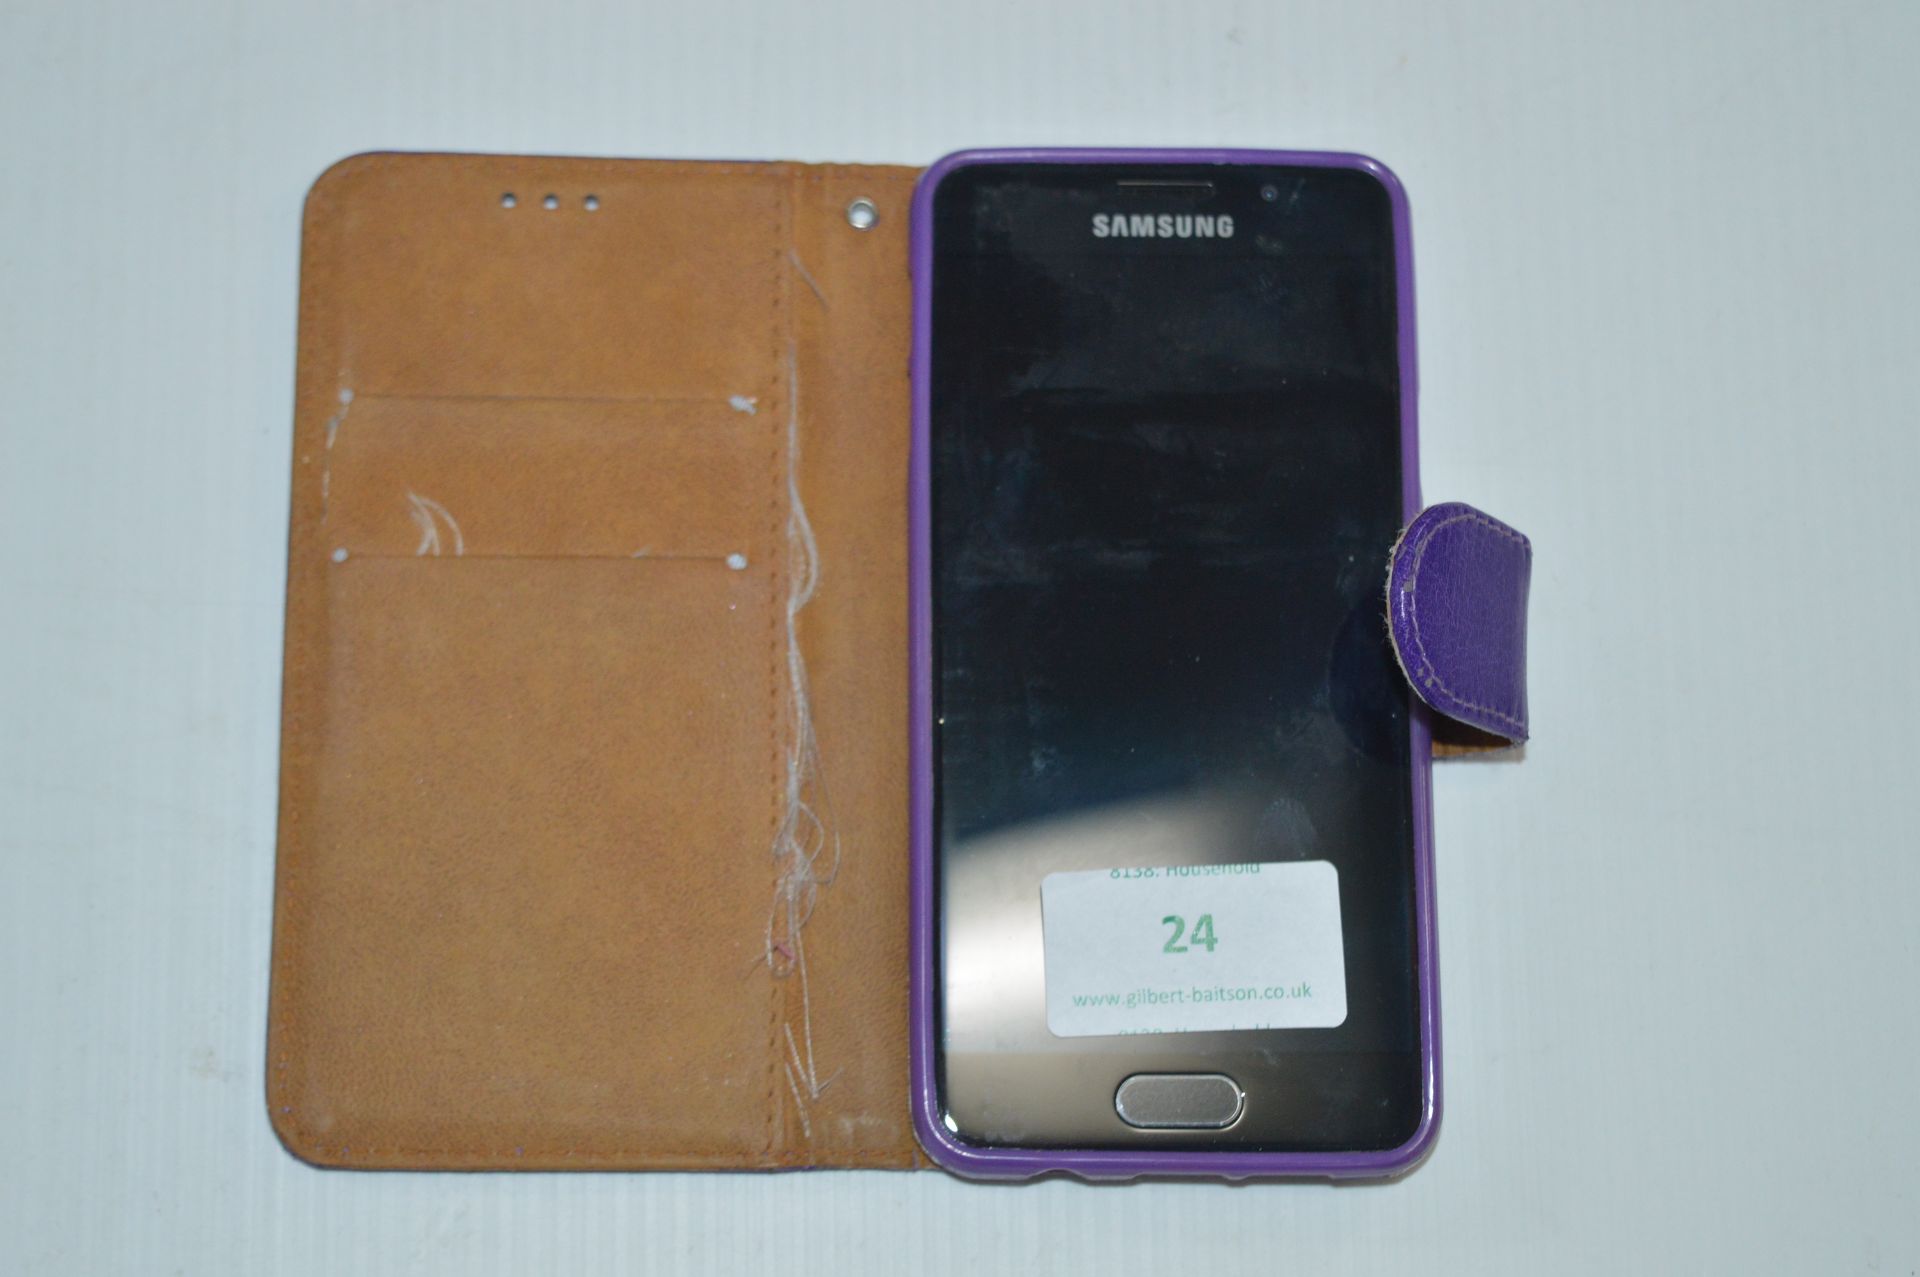 *Samsung Galaxy Mobile Phone